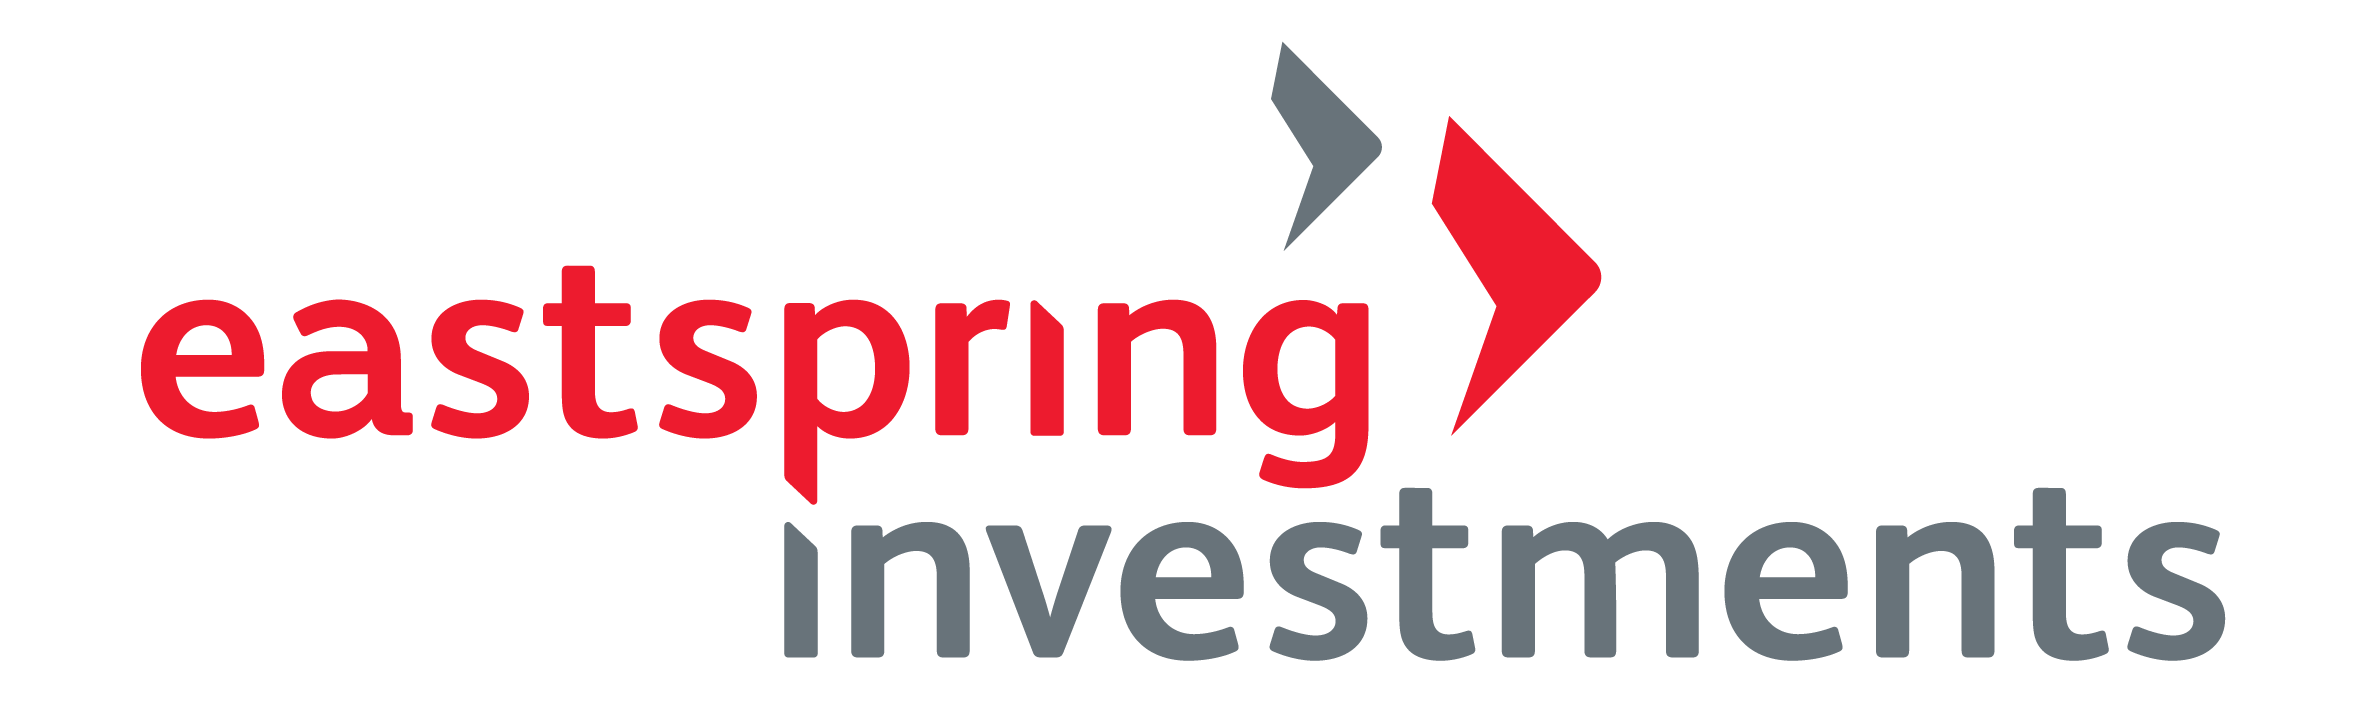 eastspring us logo